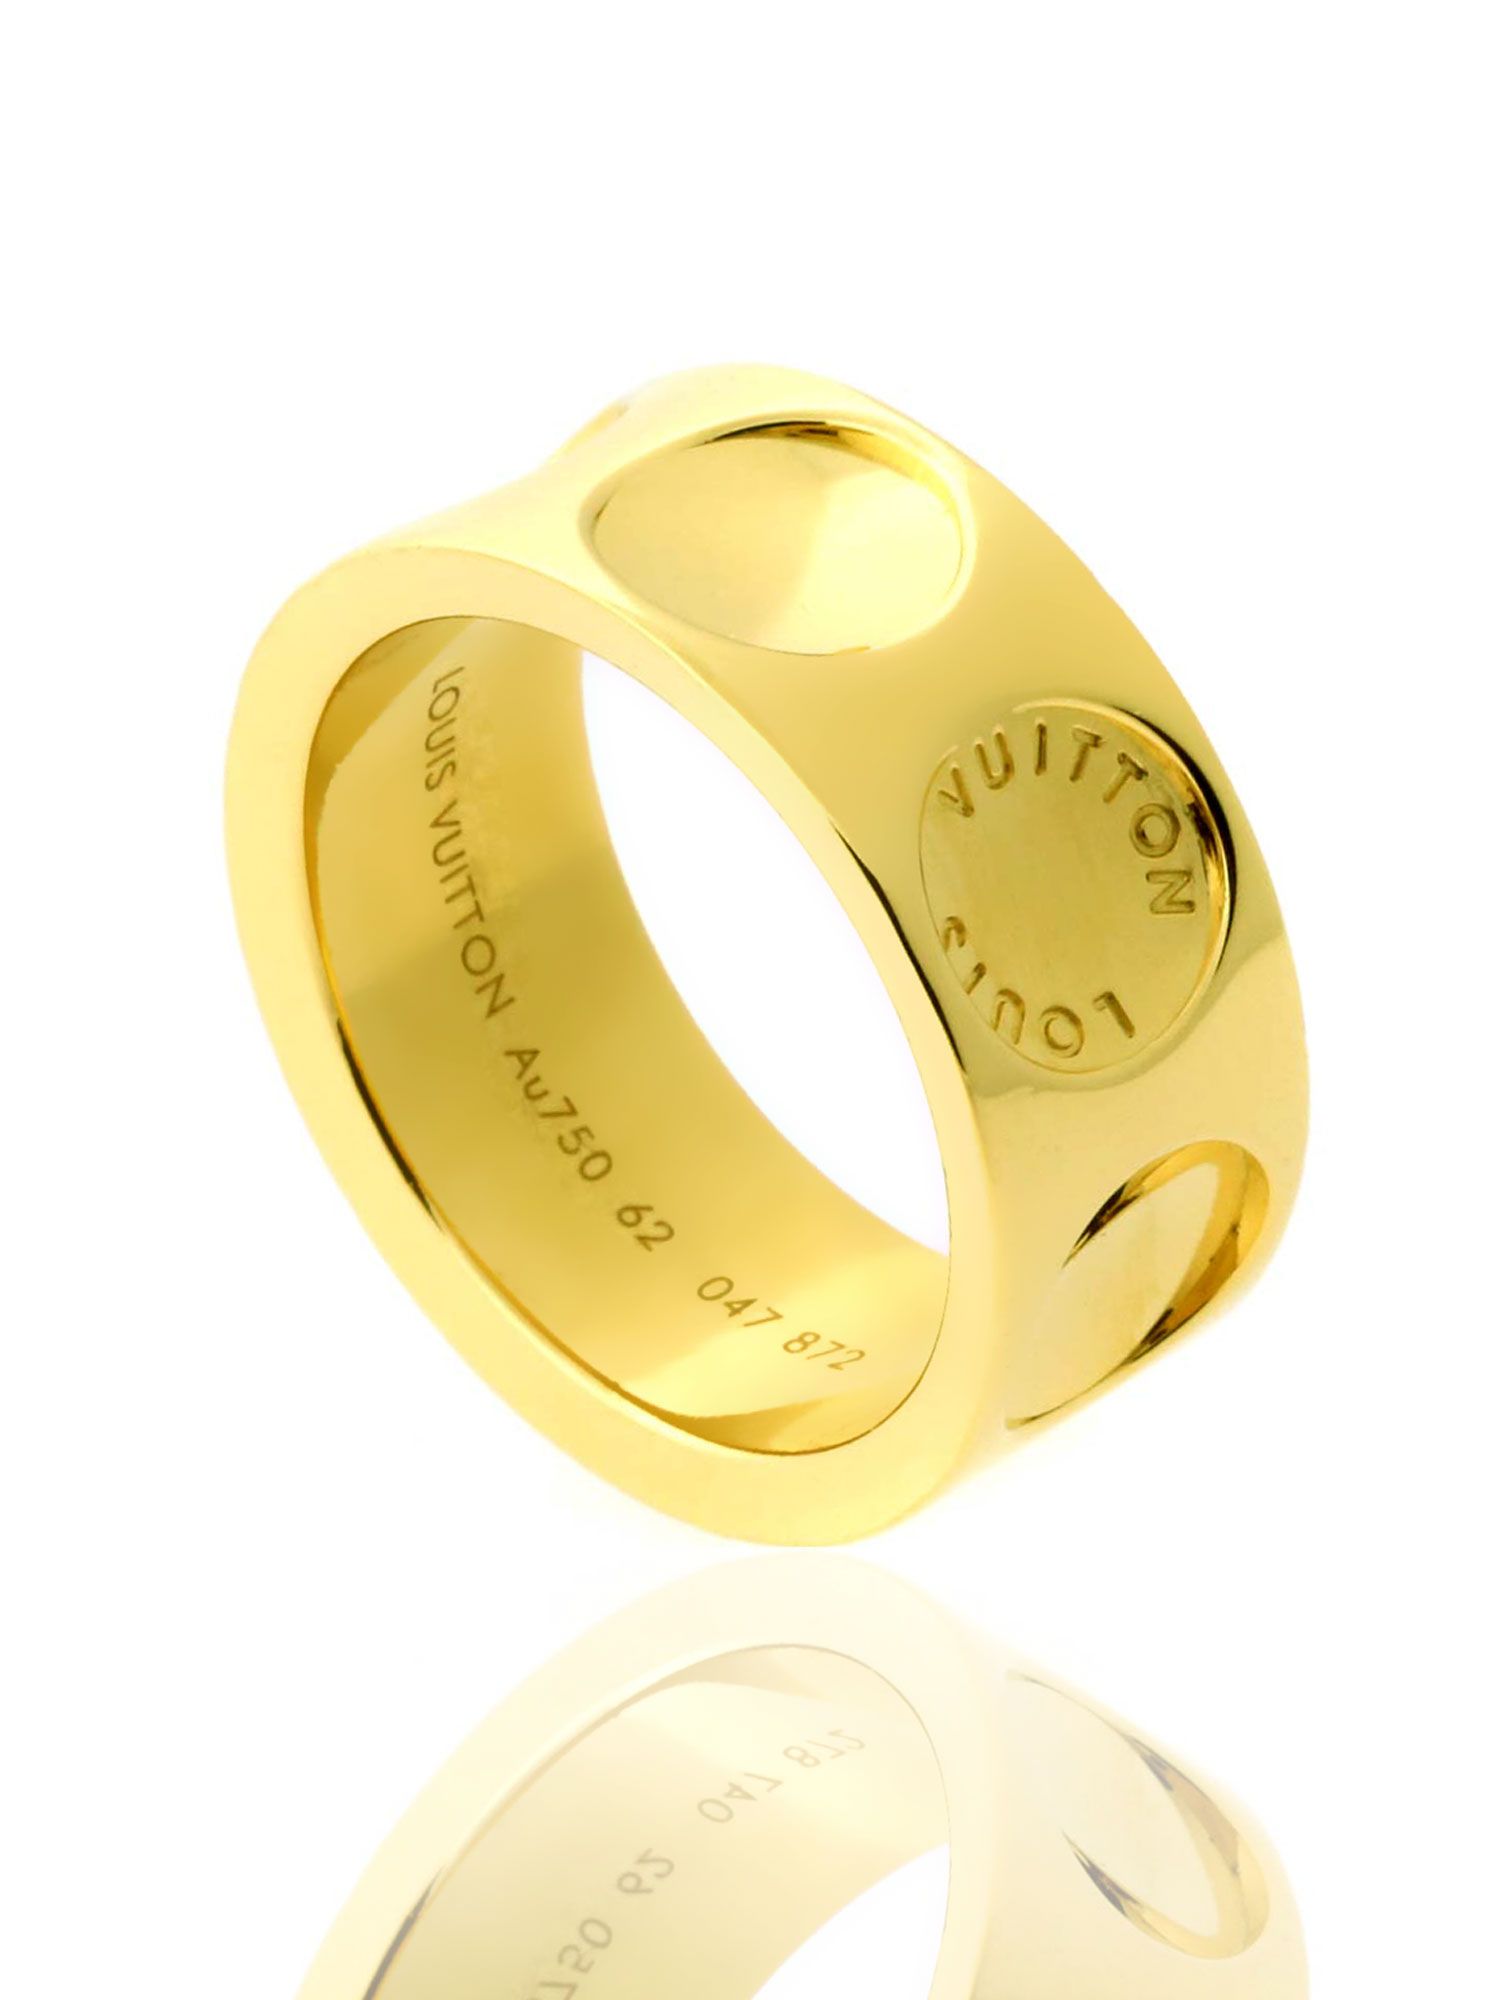 Louis Vuitton Empreinte Ring, Yellow Gold and Diamonds Gold. Size 48